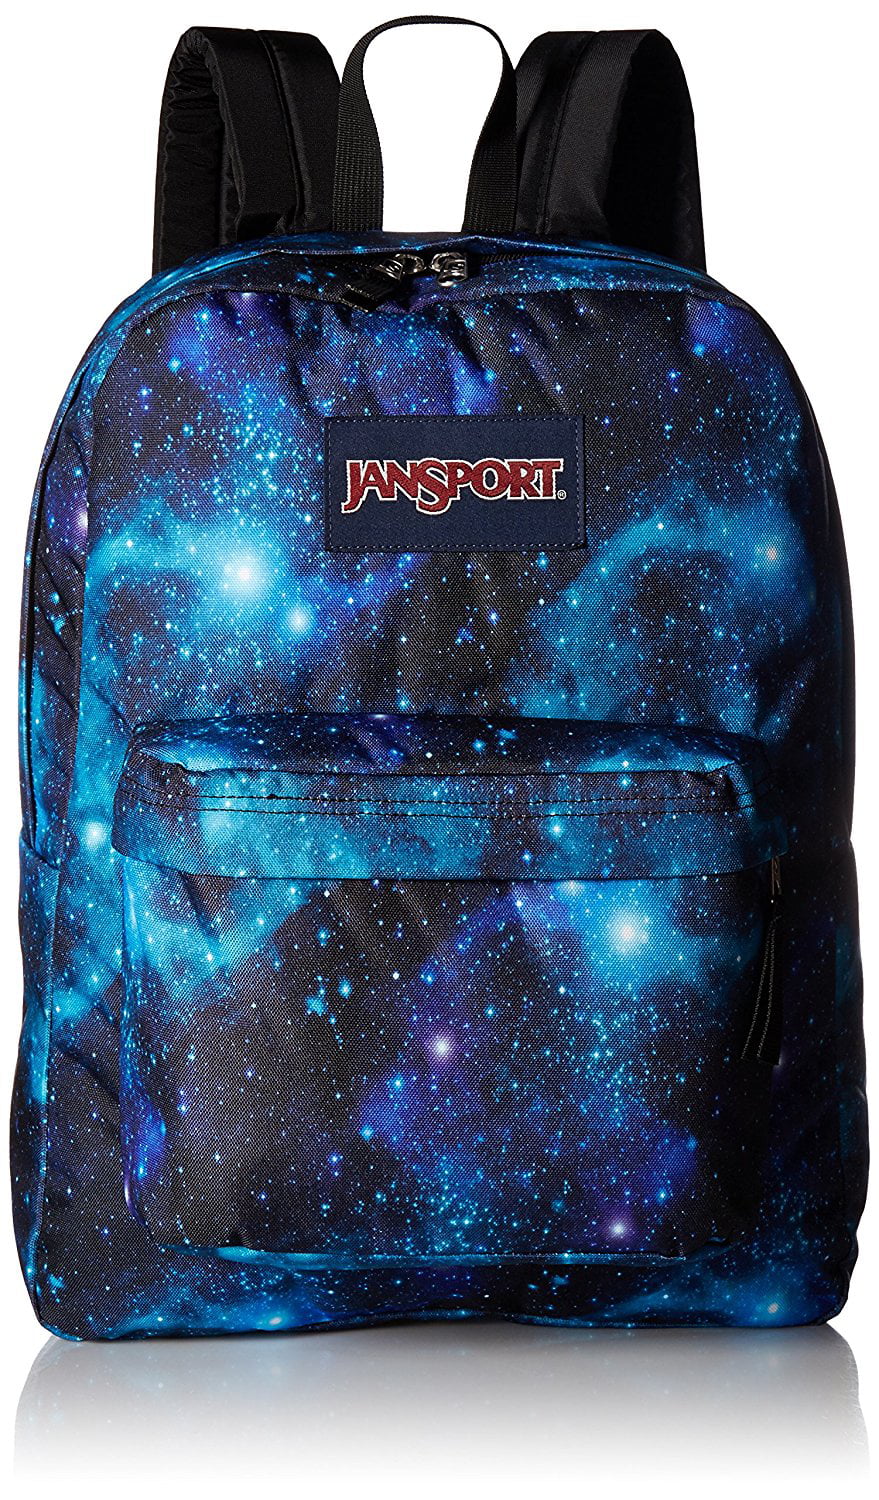 jansport backpack galaxy print